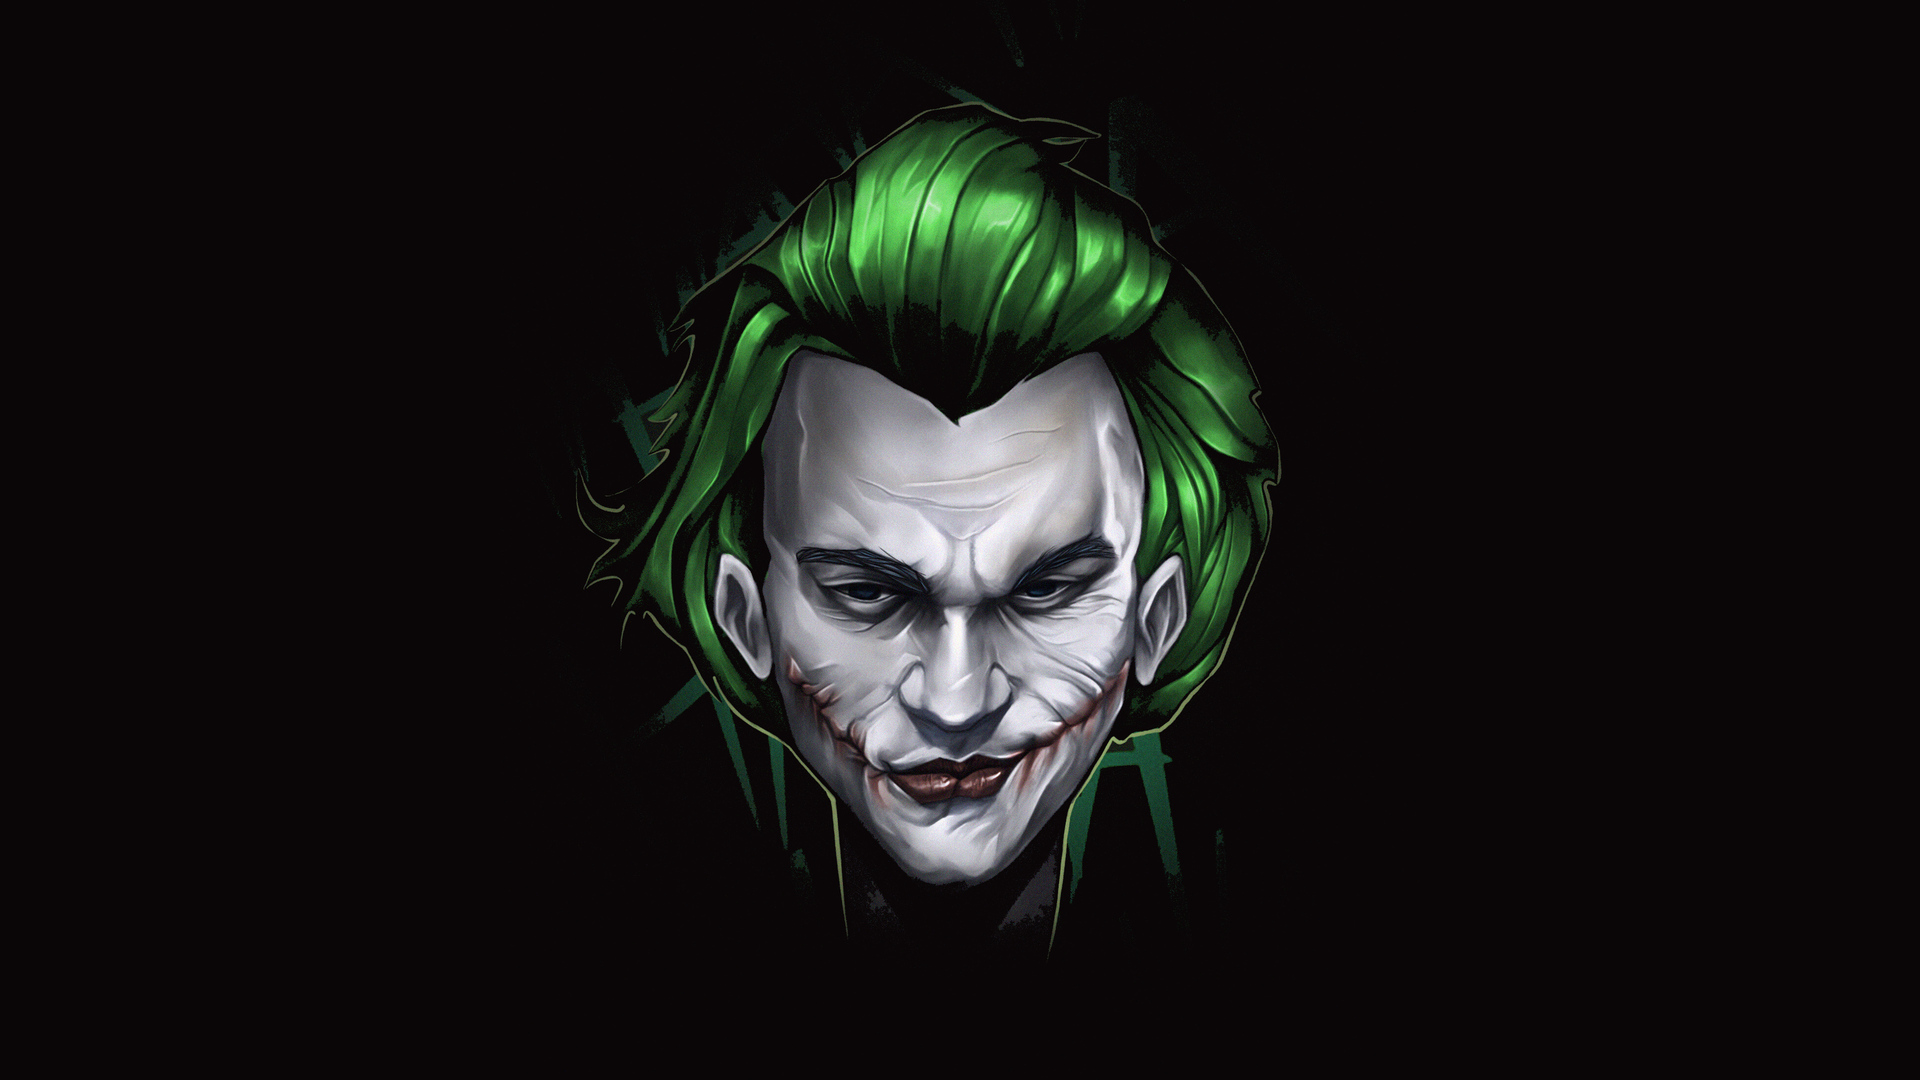 Joker  Heath Ledger 8K wallpaper download